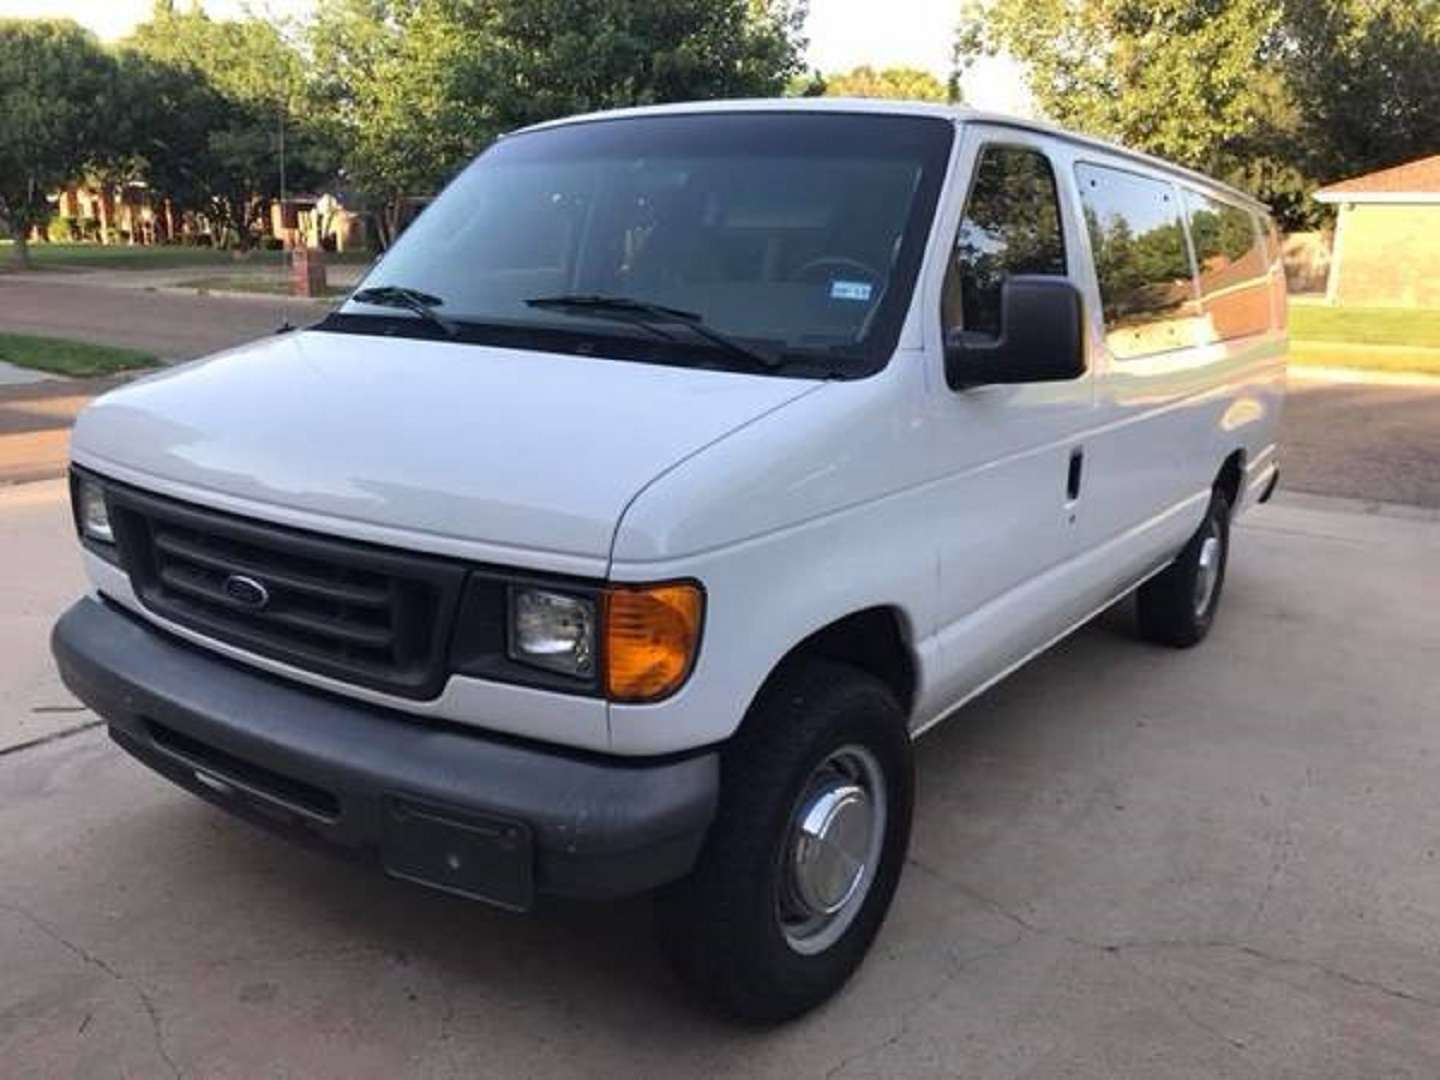 craigslist van for sale by owner